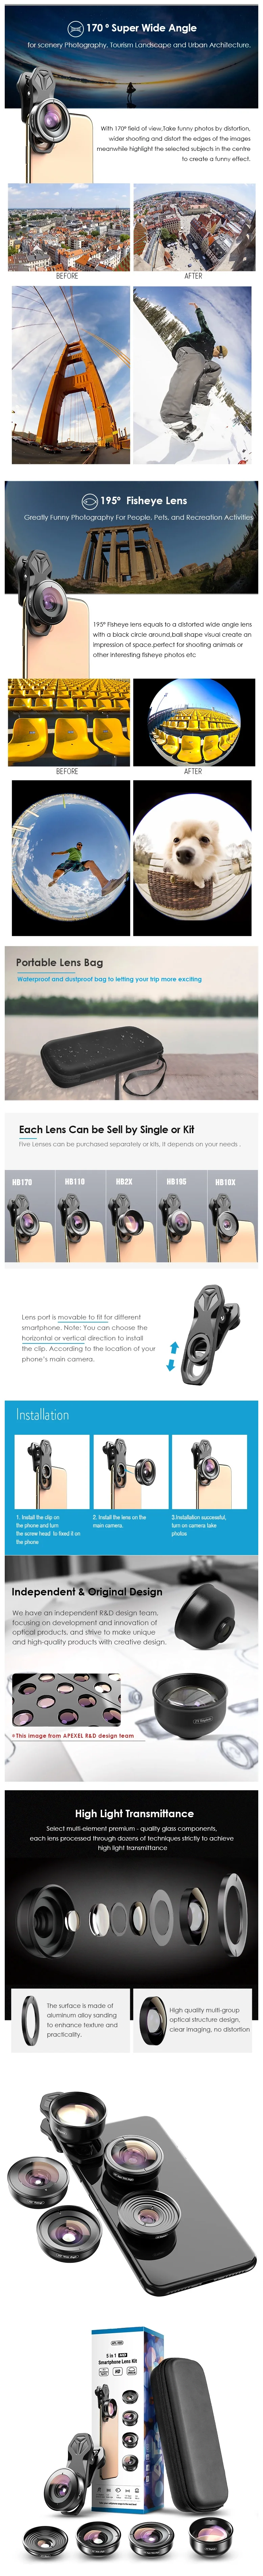 Apexel 5 in 1 Fish Eye-Macro-Wide Angle-Zoom Smartphone Telephoto Lenses